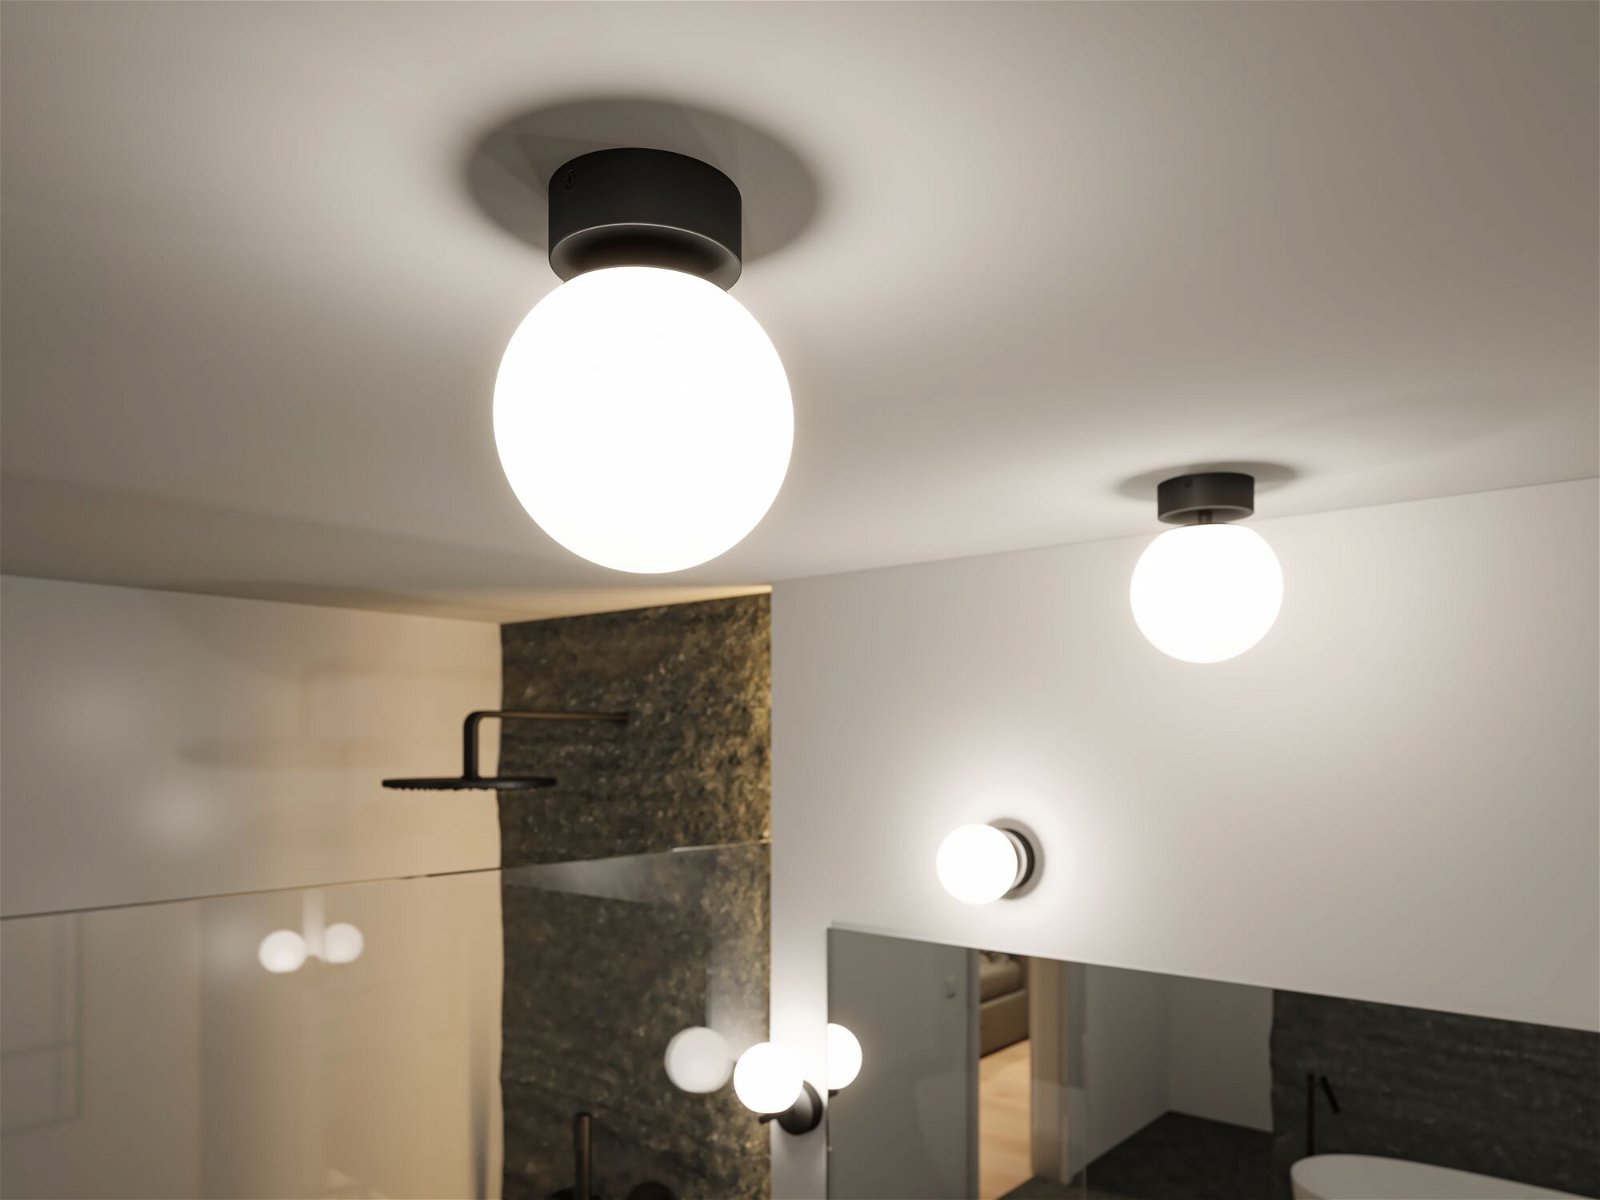 Selection Bathroom LED-plafondlamp Gove IP44 3000K 400lm 230V 5W Zwart mat/Satijn